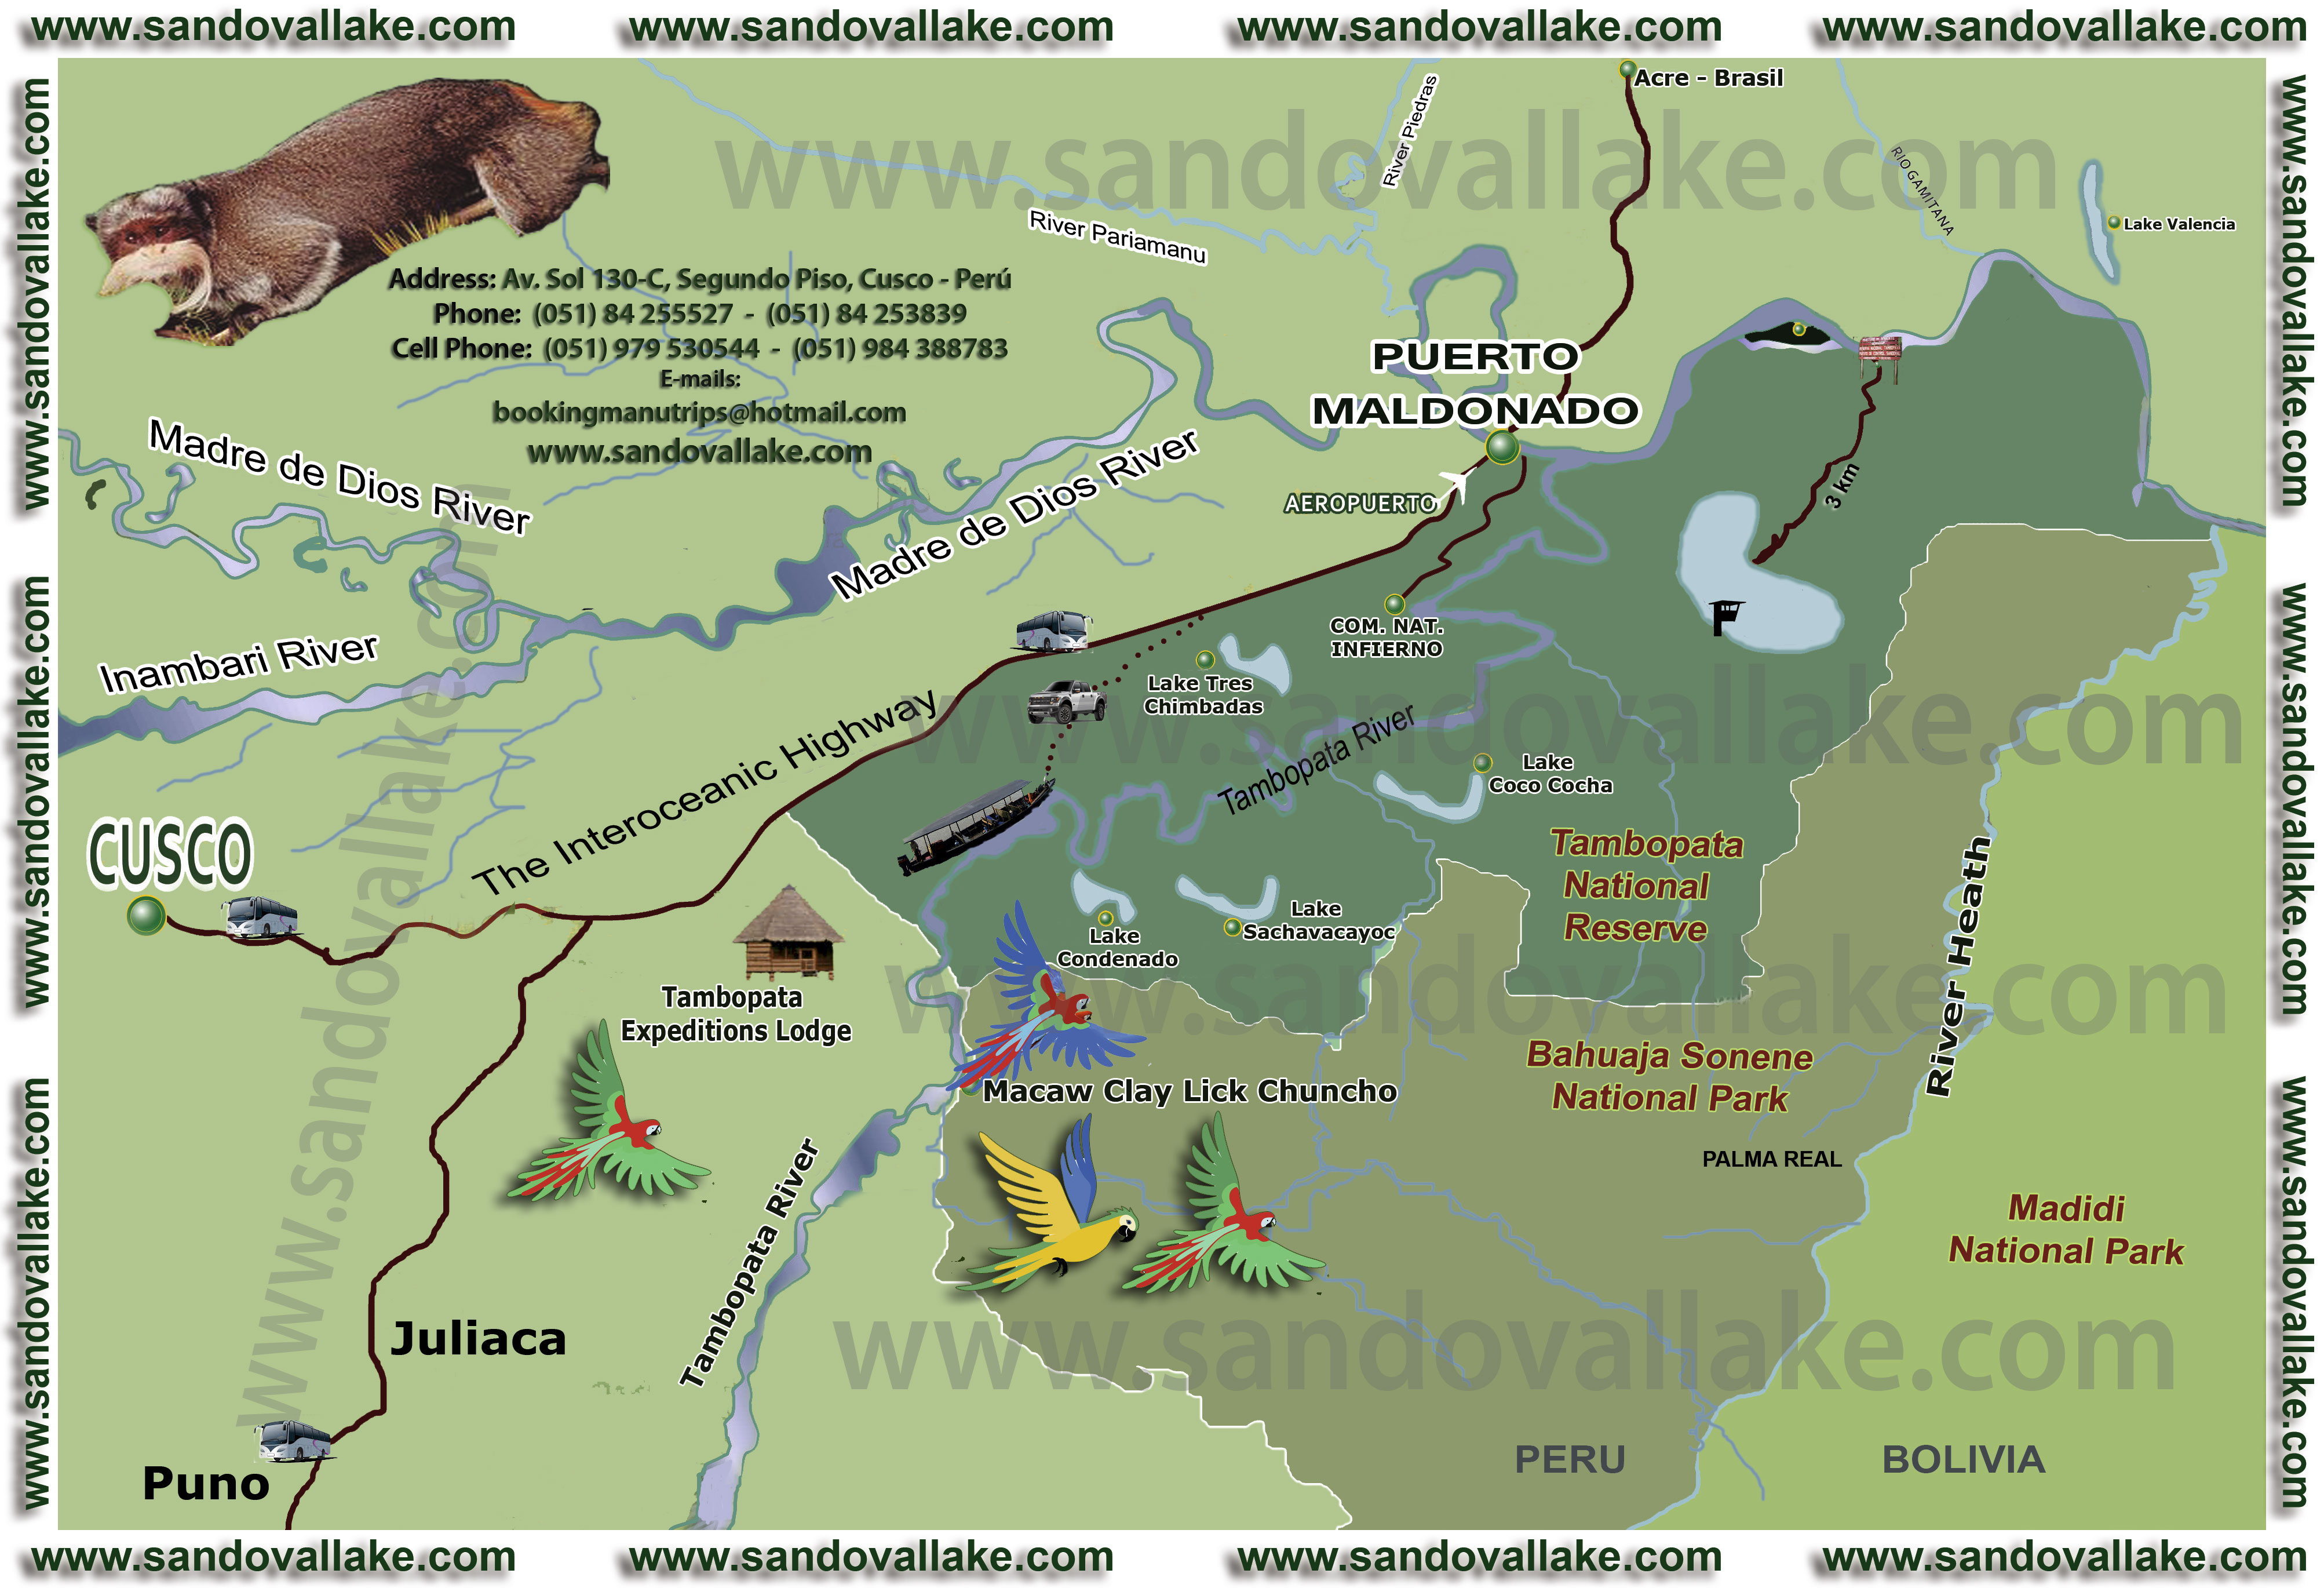 sandoval lake tambopata Amazon Wildlife Macaw Clay Lick reserve